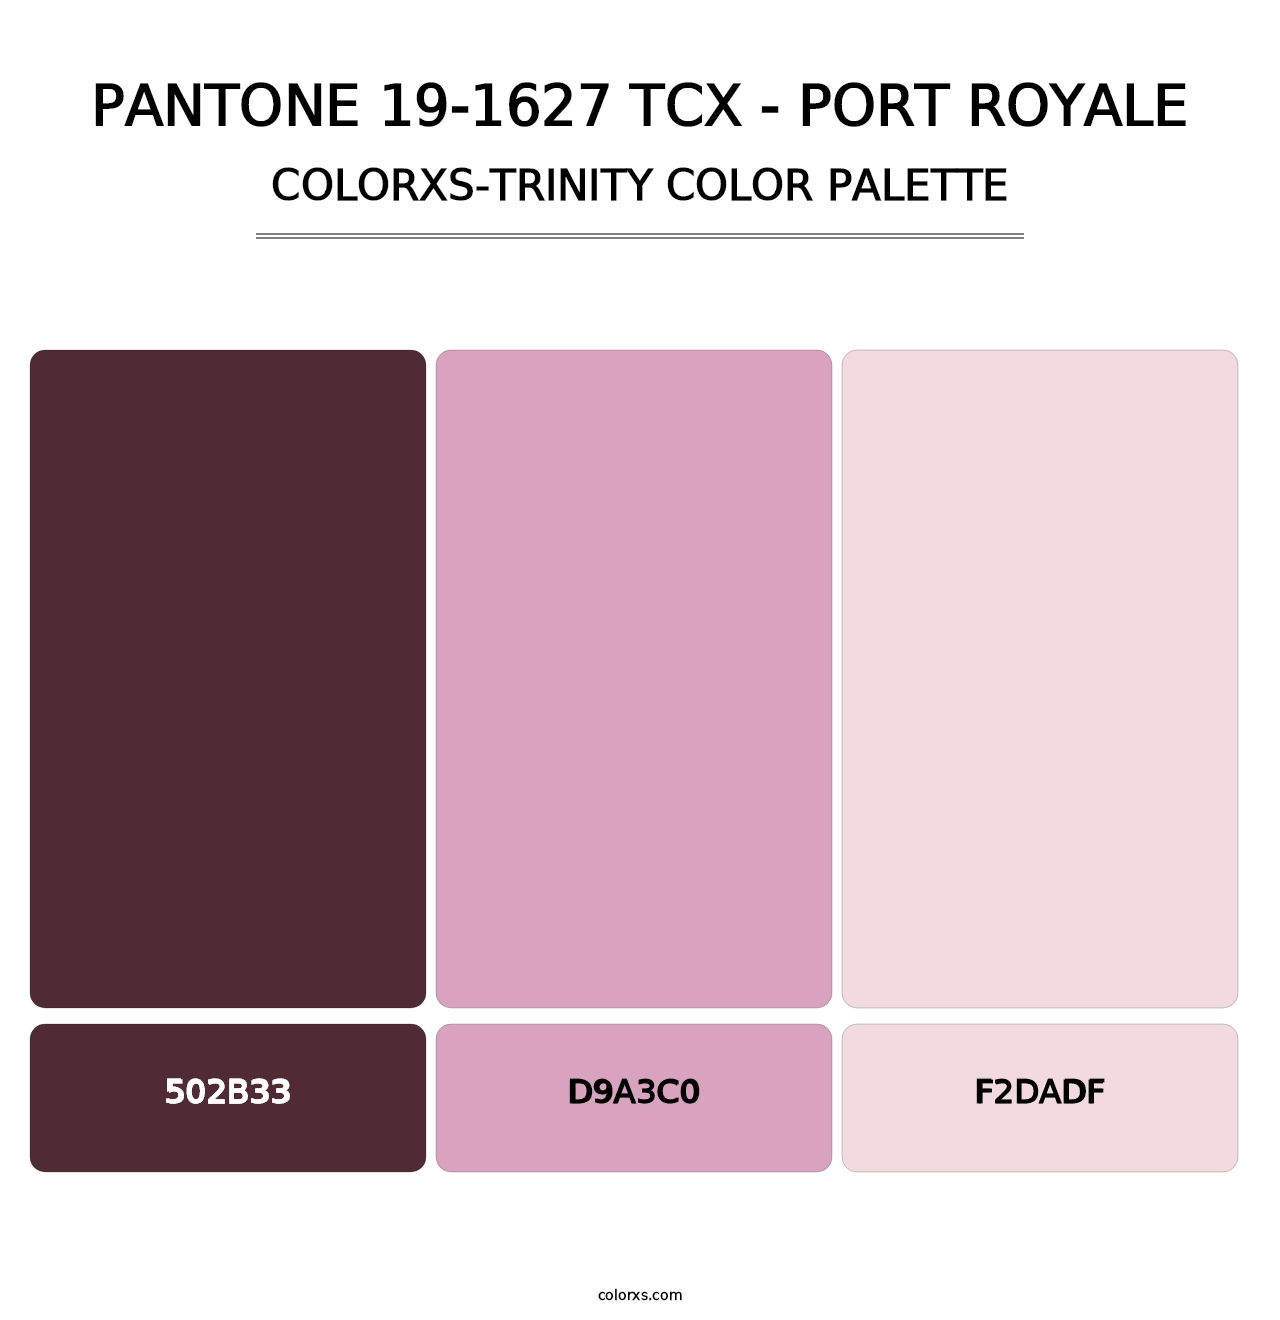 PANTONE 19-1627 TCX - Port Royale - Colorxs Trinity Palette